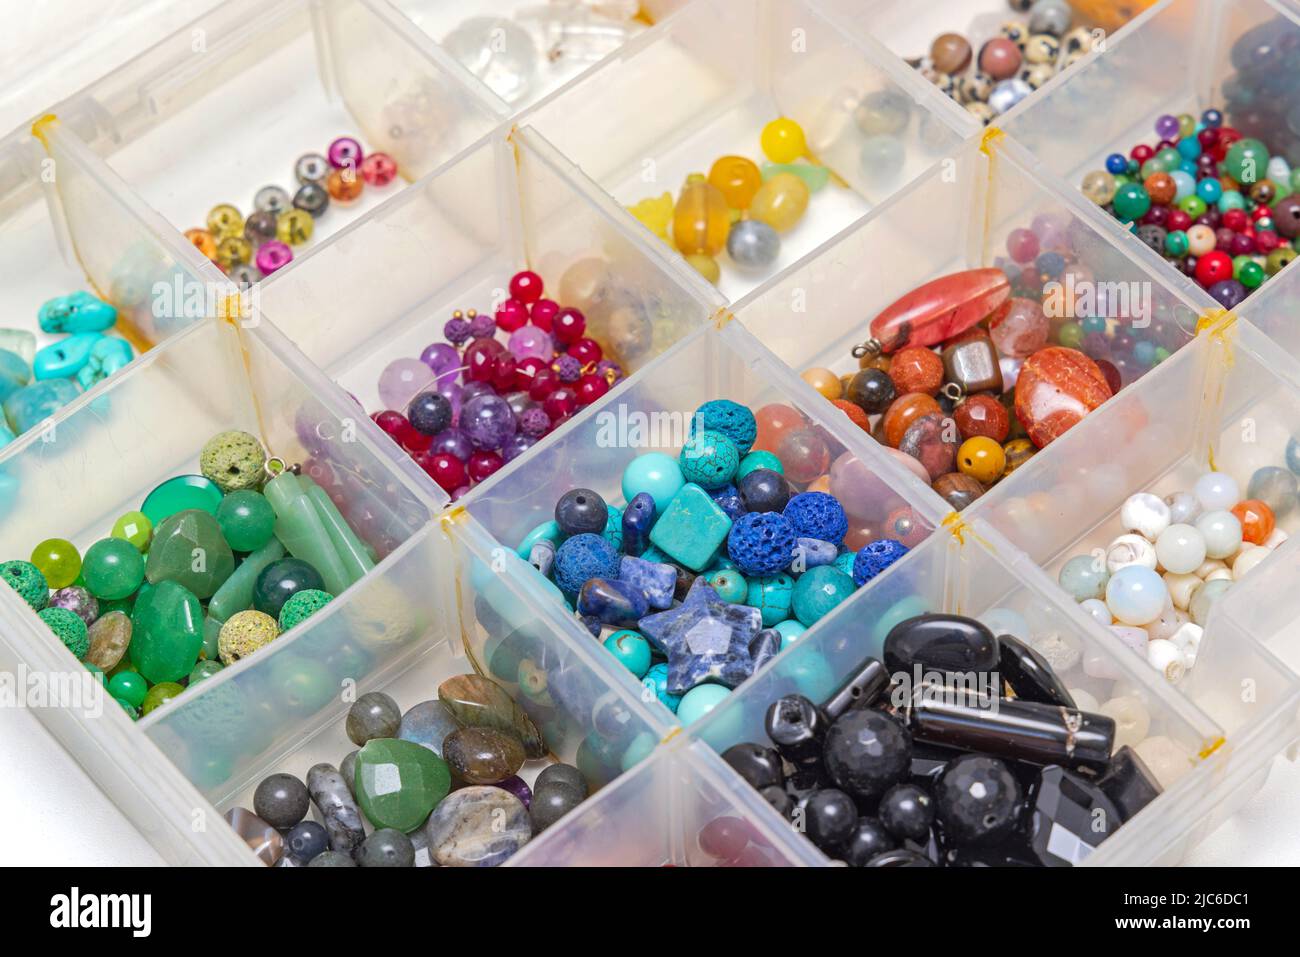 Gemstones Jewelry Craft Material in Organizer Tackle Box Stock Photo - Alamy